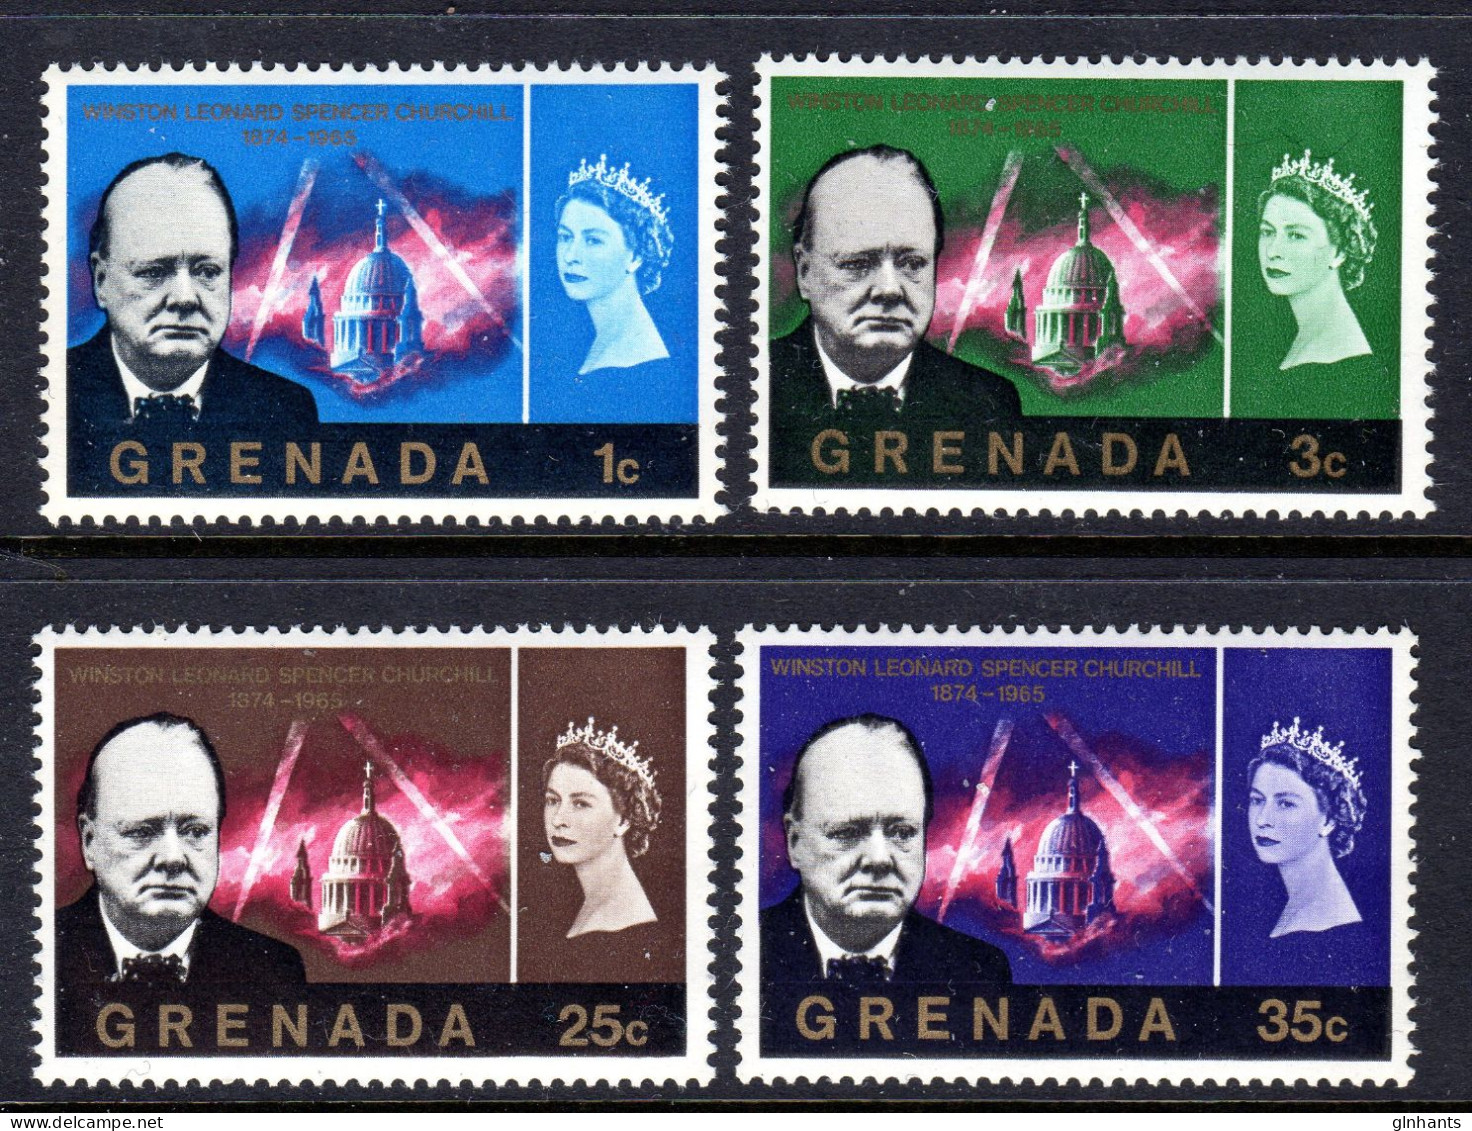 GRENADA - 1966 CHURCHILL COMMEMORATION SET (4V) FINE MNH ** SG 225-228 - Grenada (...-1974)